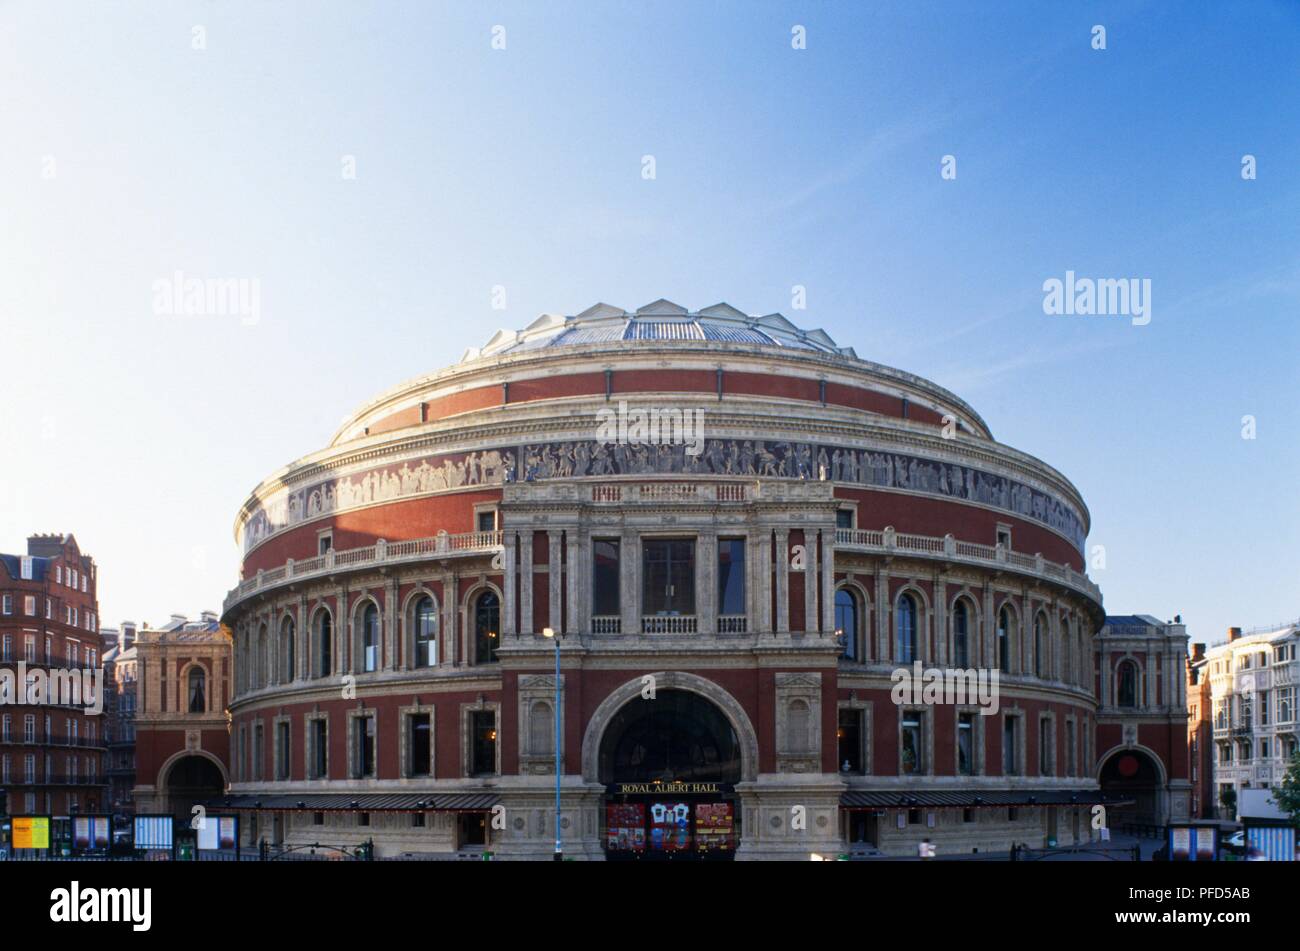 Great Britain, England, London, Royal Albert Hall Stock Photo